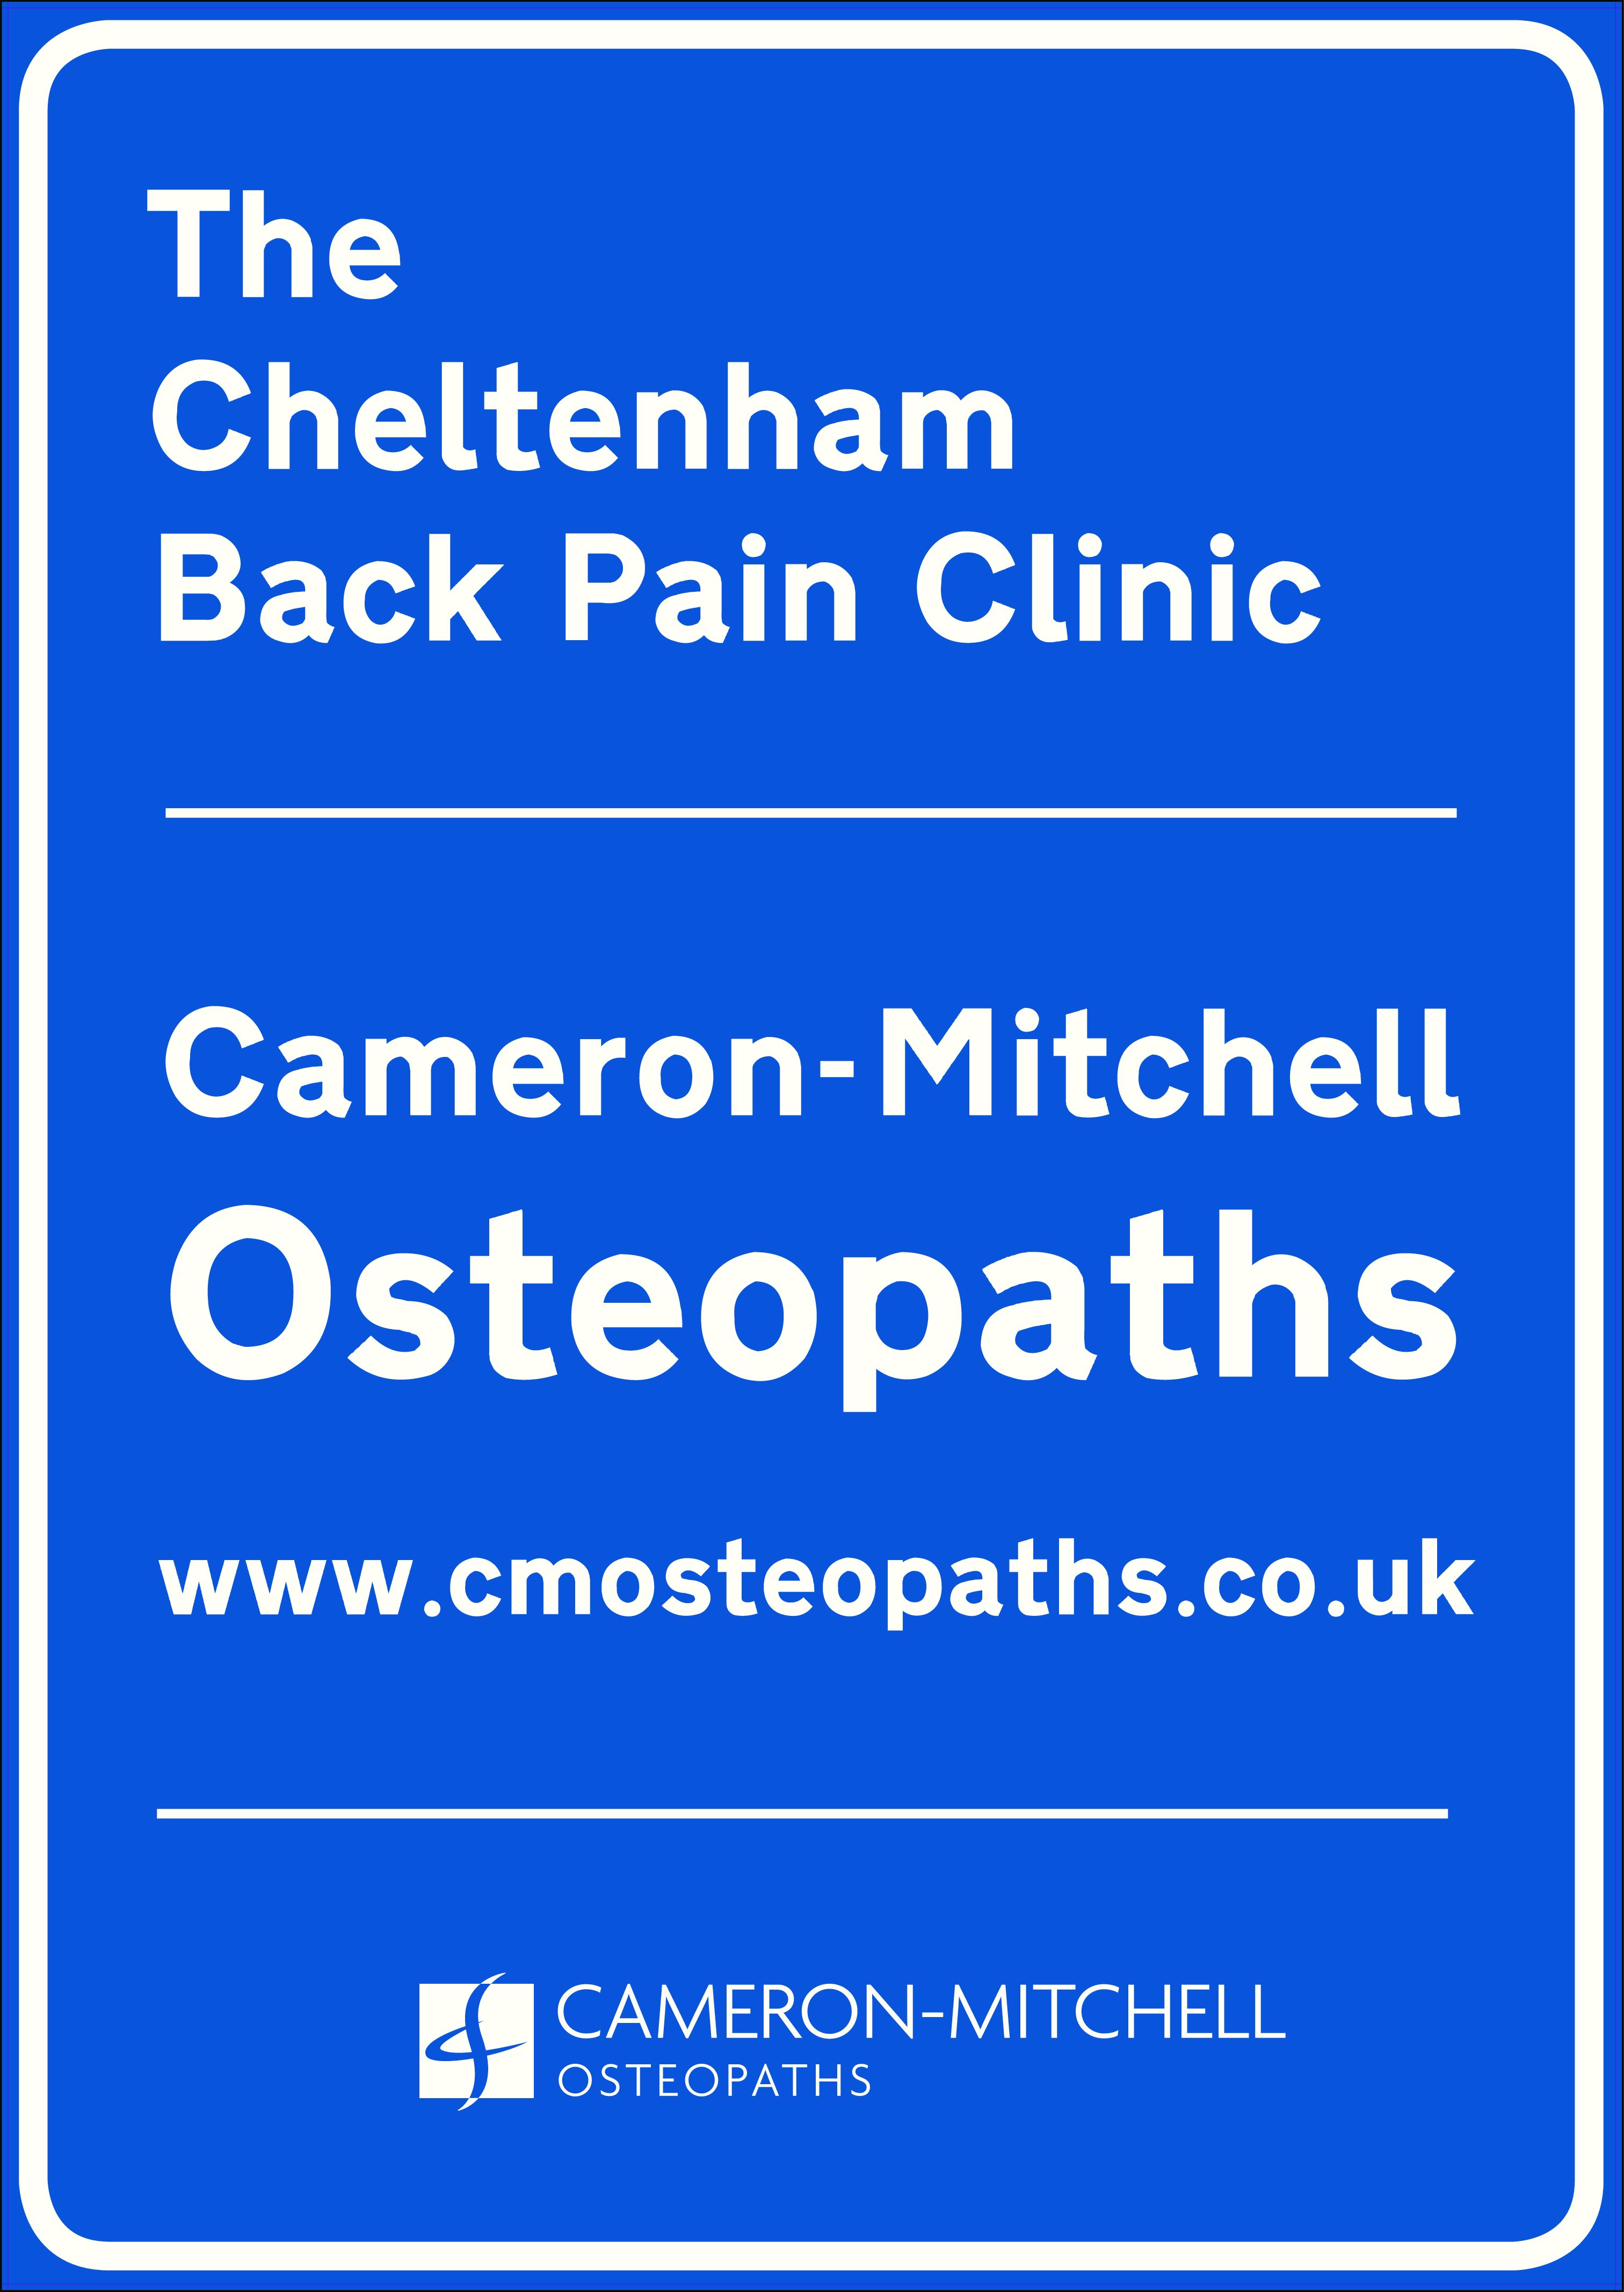 The Cheltenham Back Pain Clinic